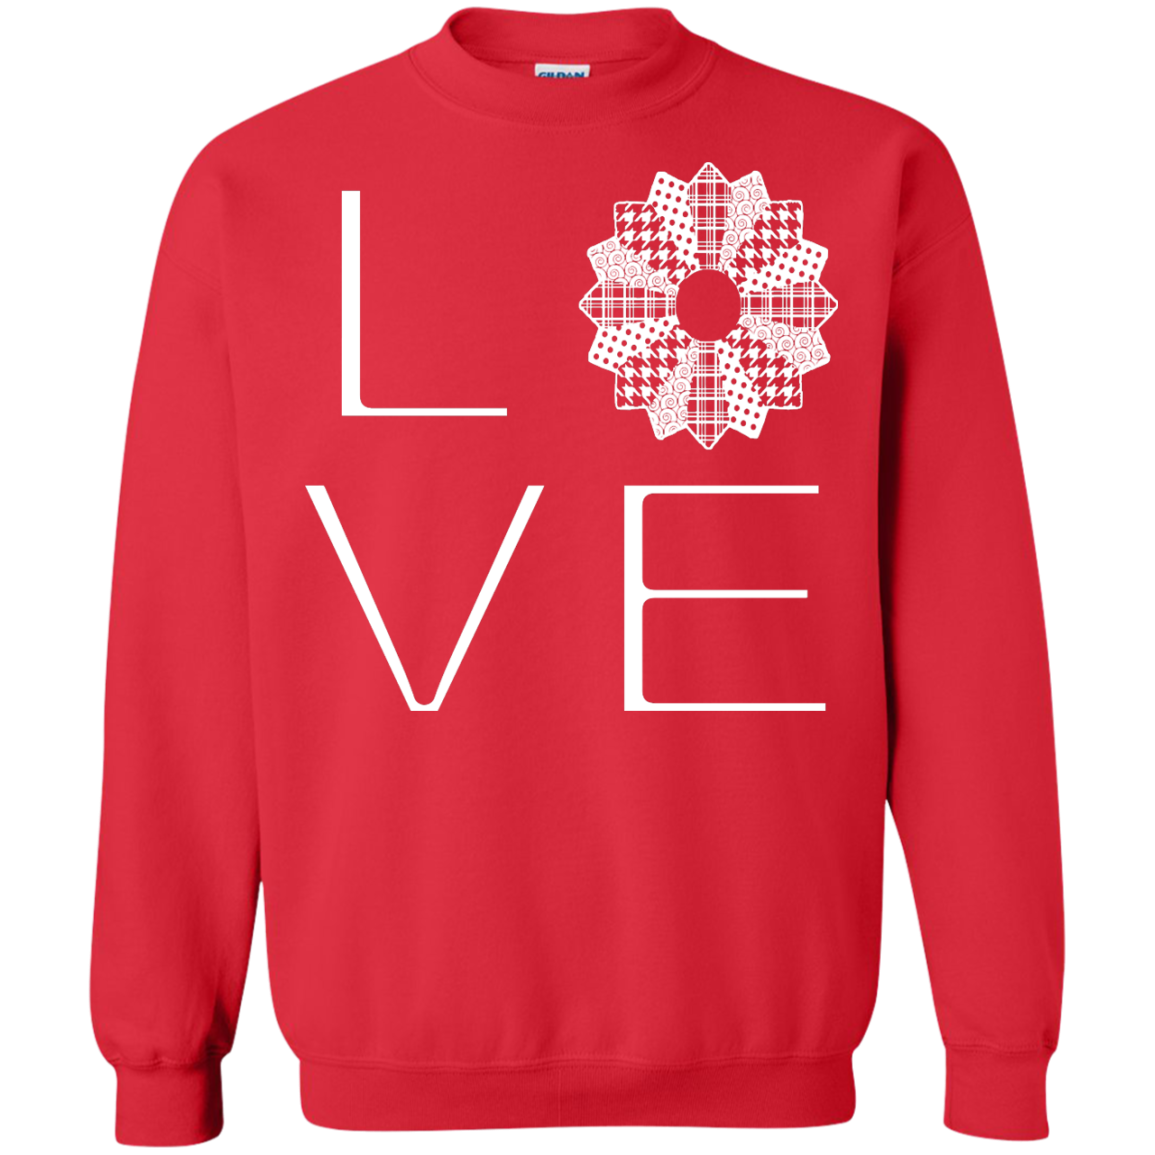 LOVE Quilting Crewneck Sweatshirts - Crafter4Life - 5